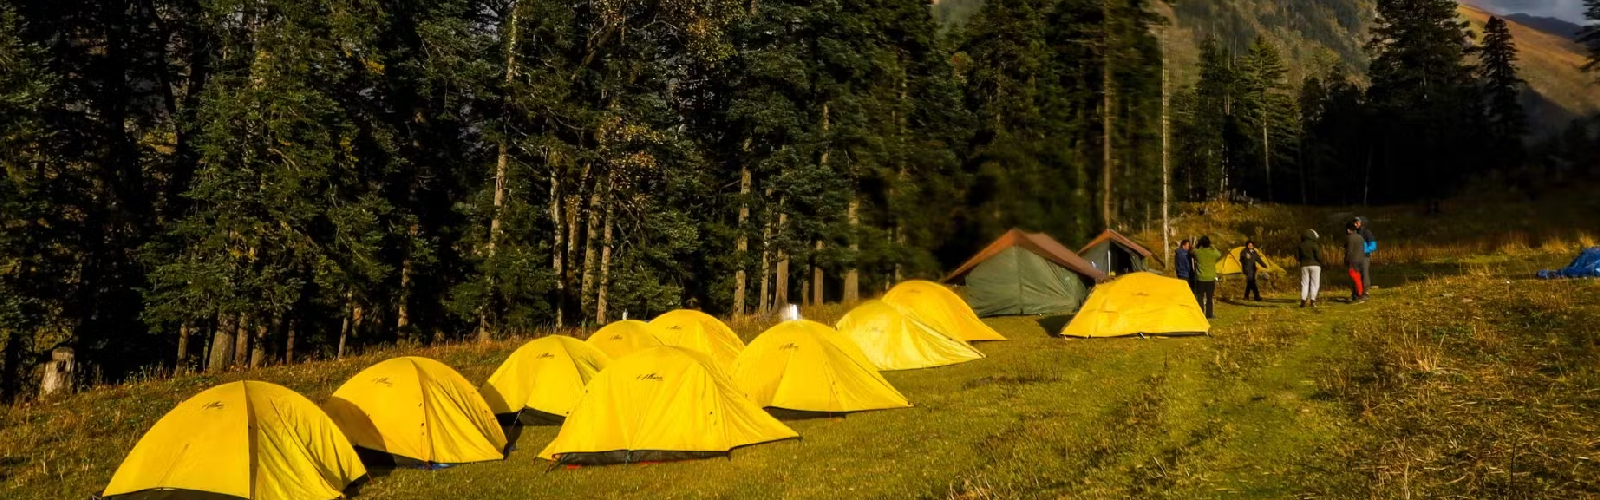 camping-in-har-ki-dun